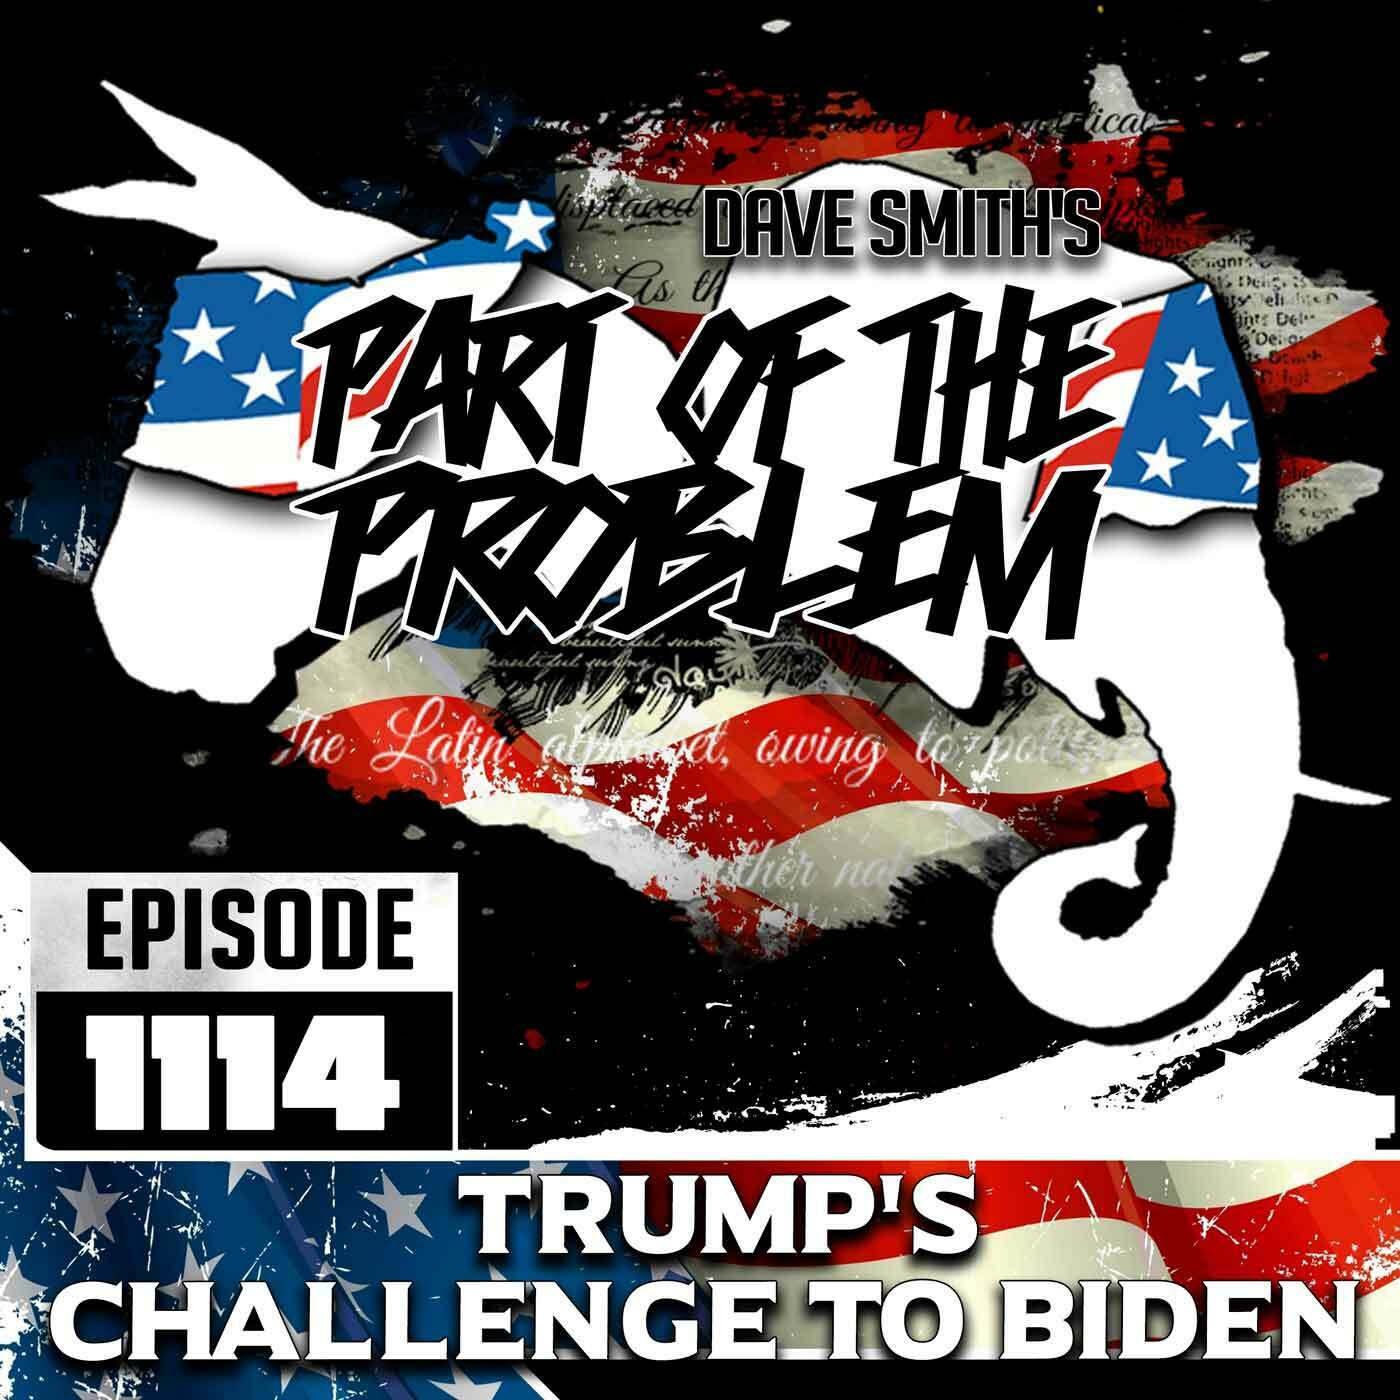 Trump’s Challenge To Biden